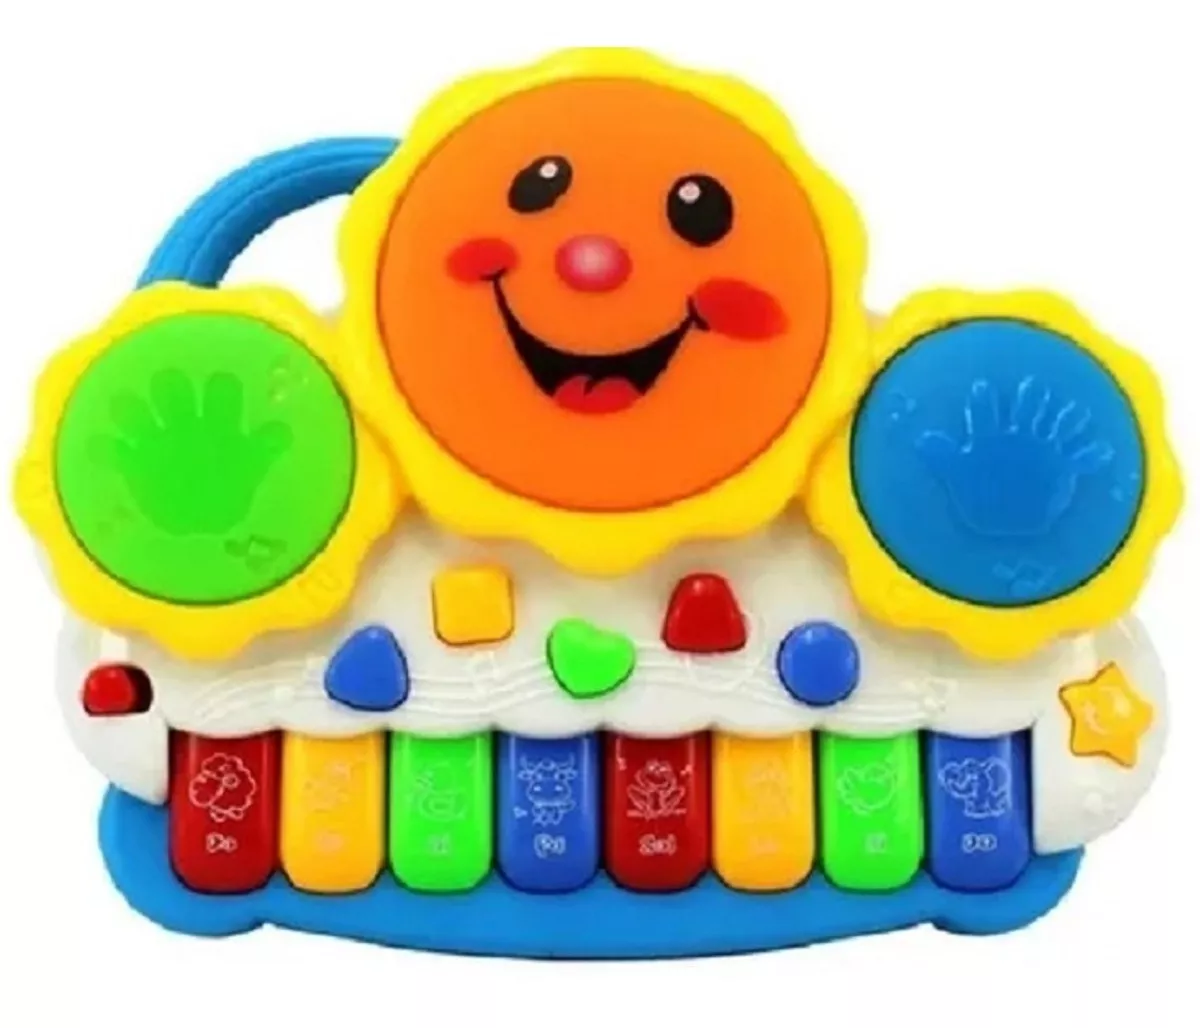 Teclado Piano Musical Bebê Brinquedo Infantil Divertido Drum